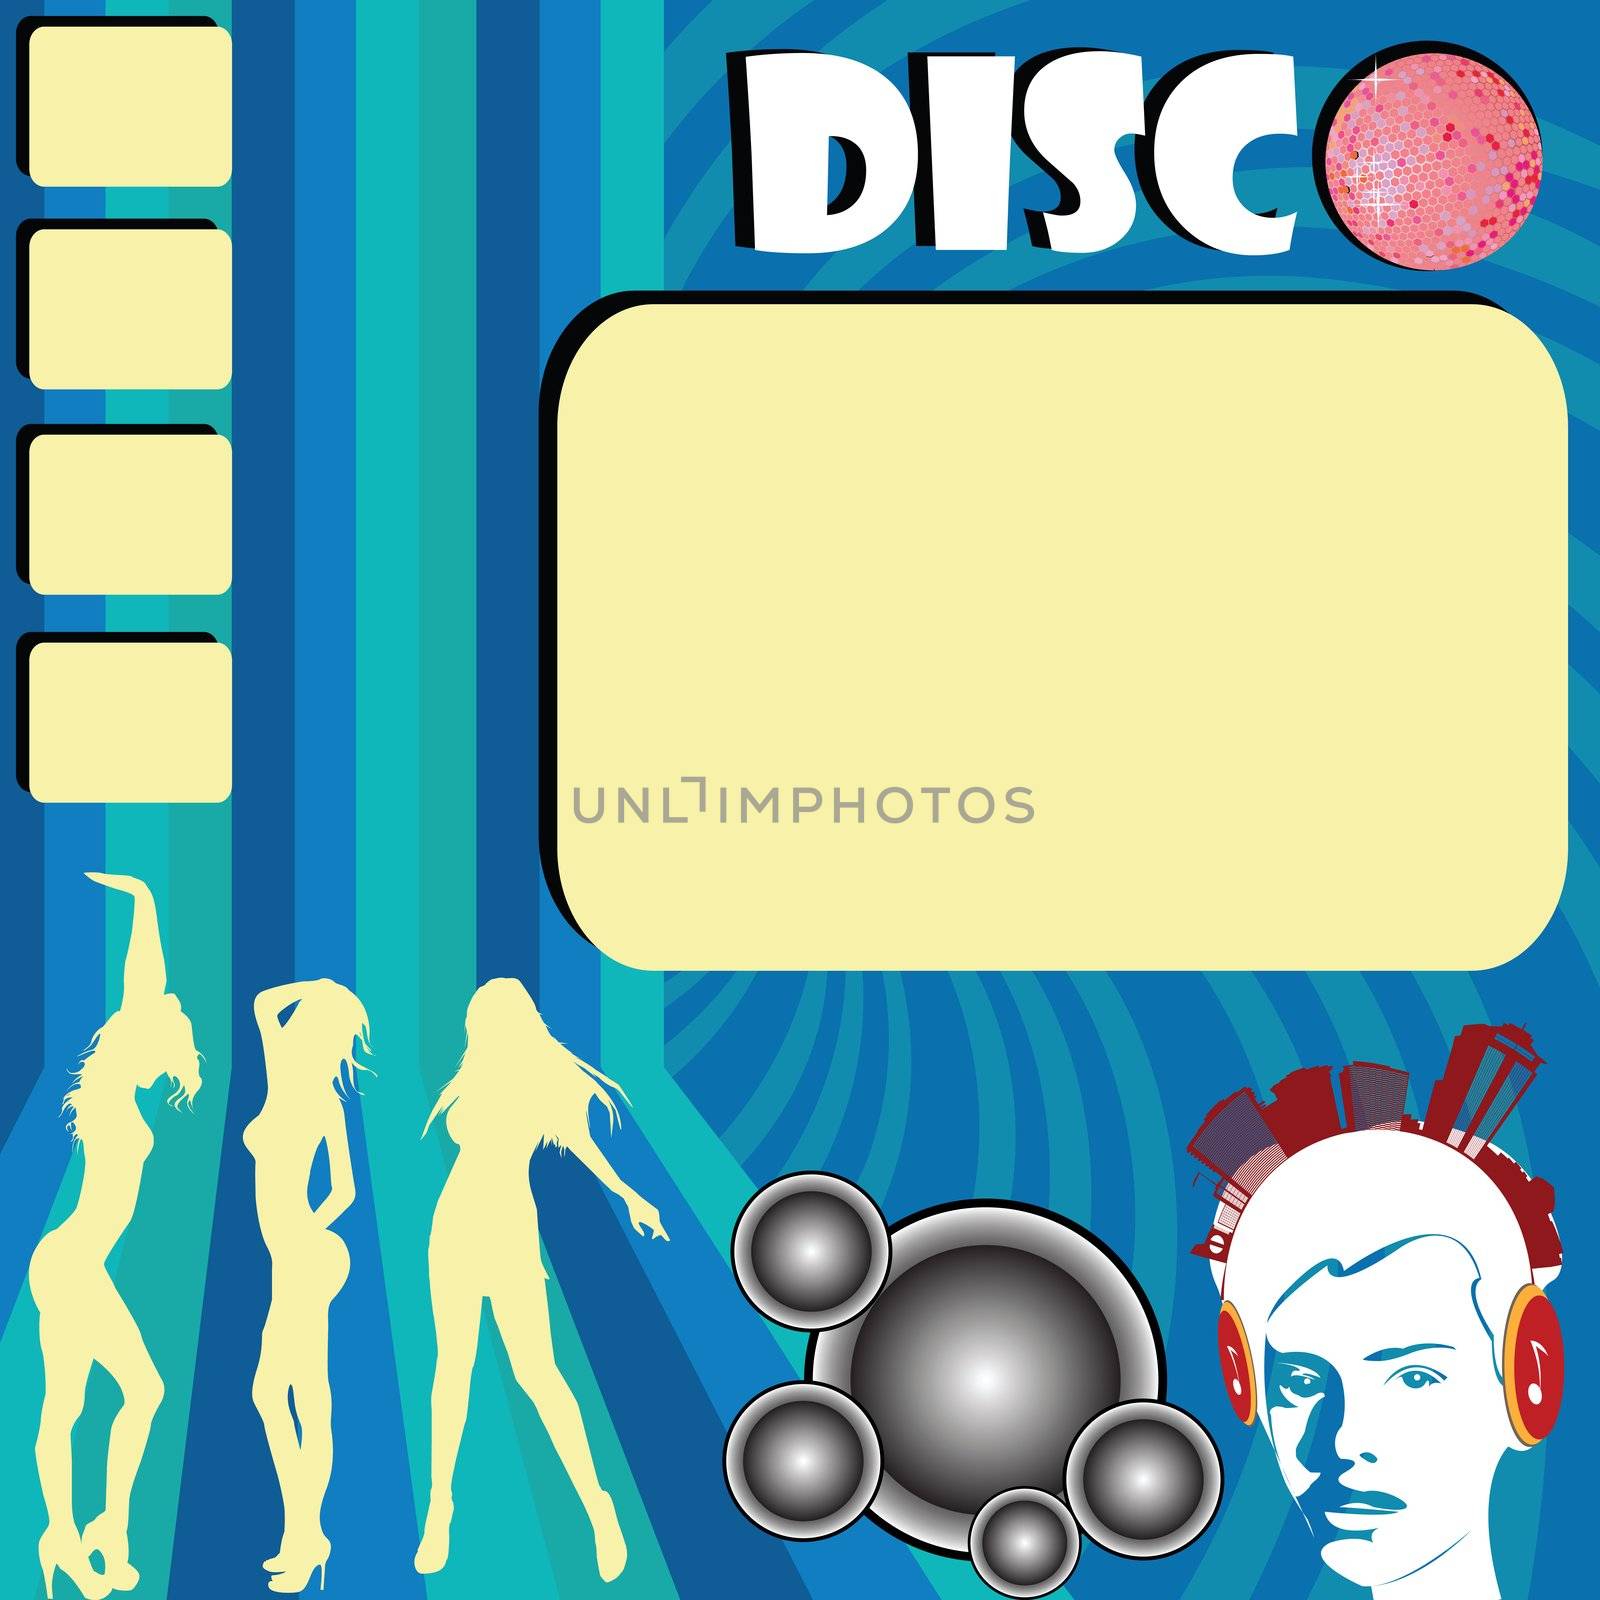 Disco flyer with club girls by Lirch